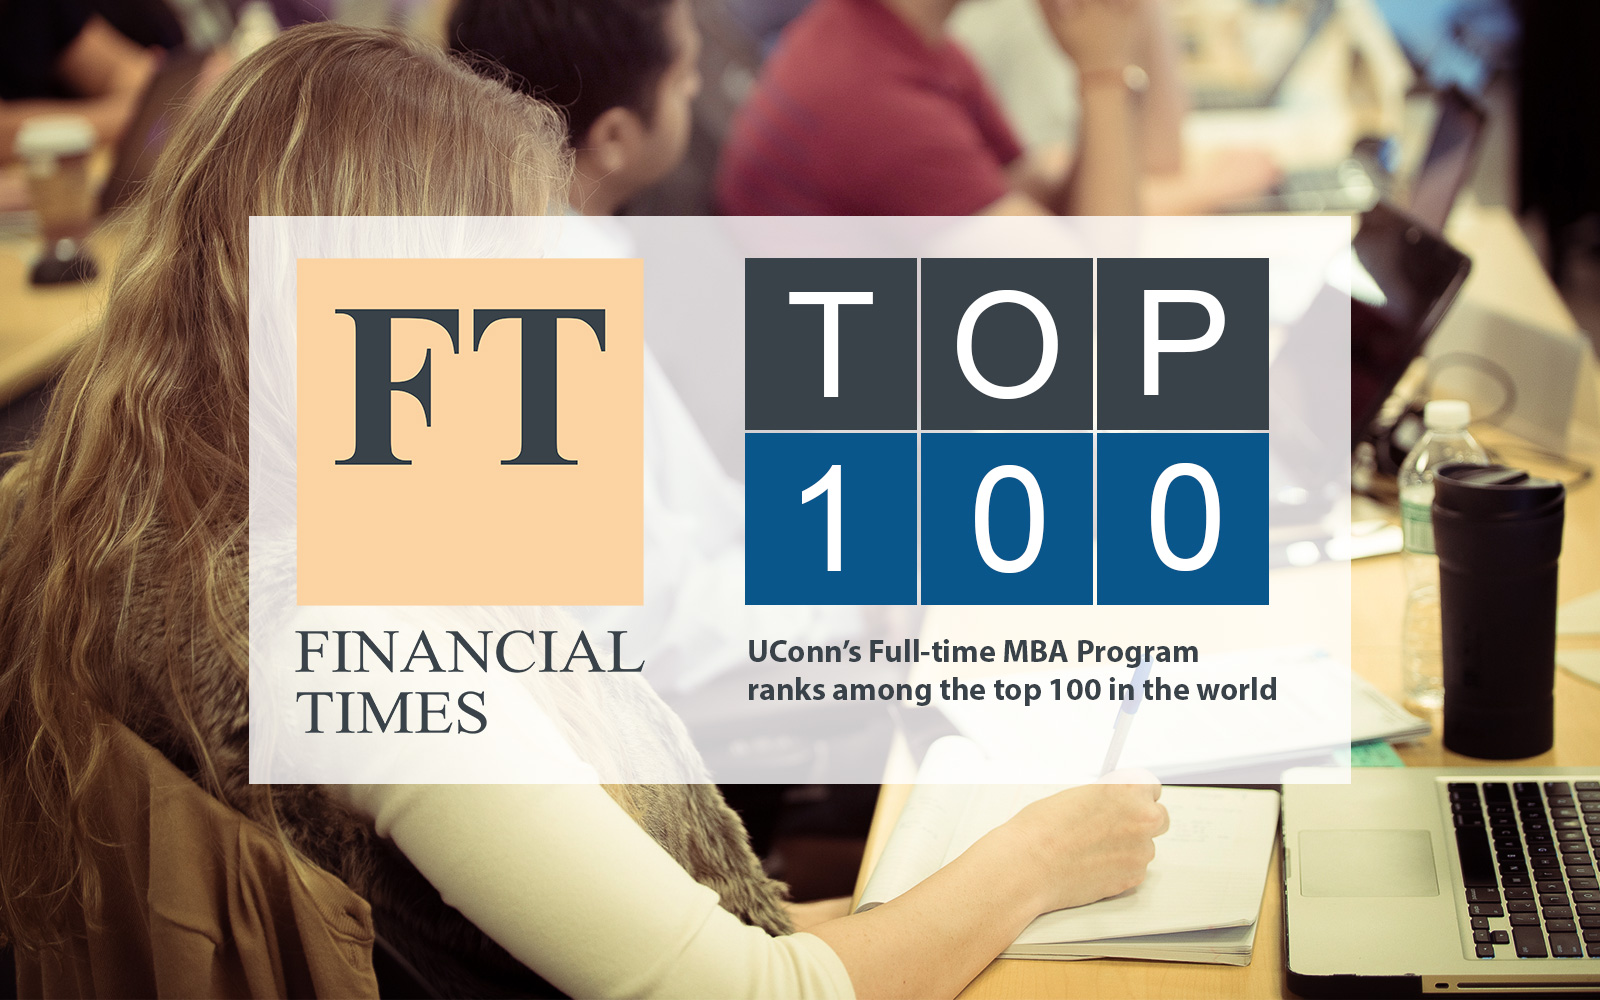 UConn's Full-time MBA Program ranks among the top 100 in the world.